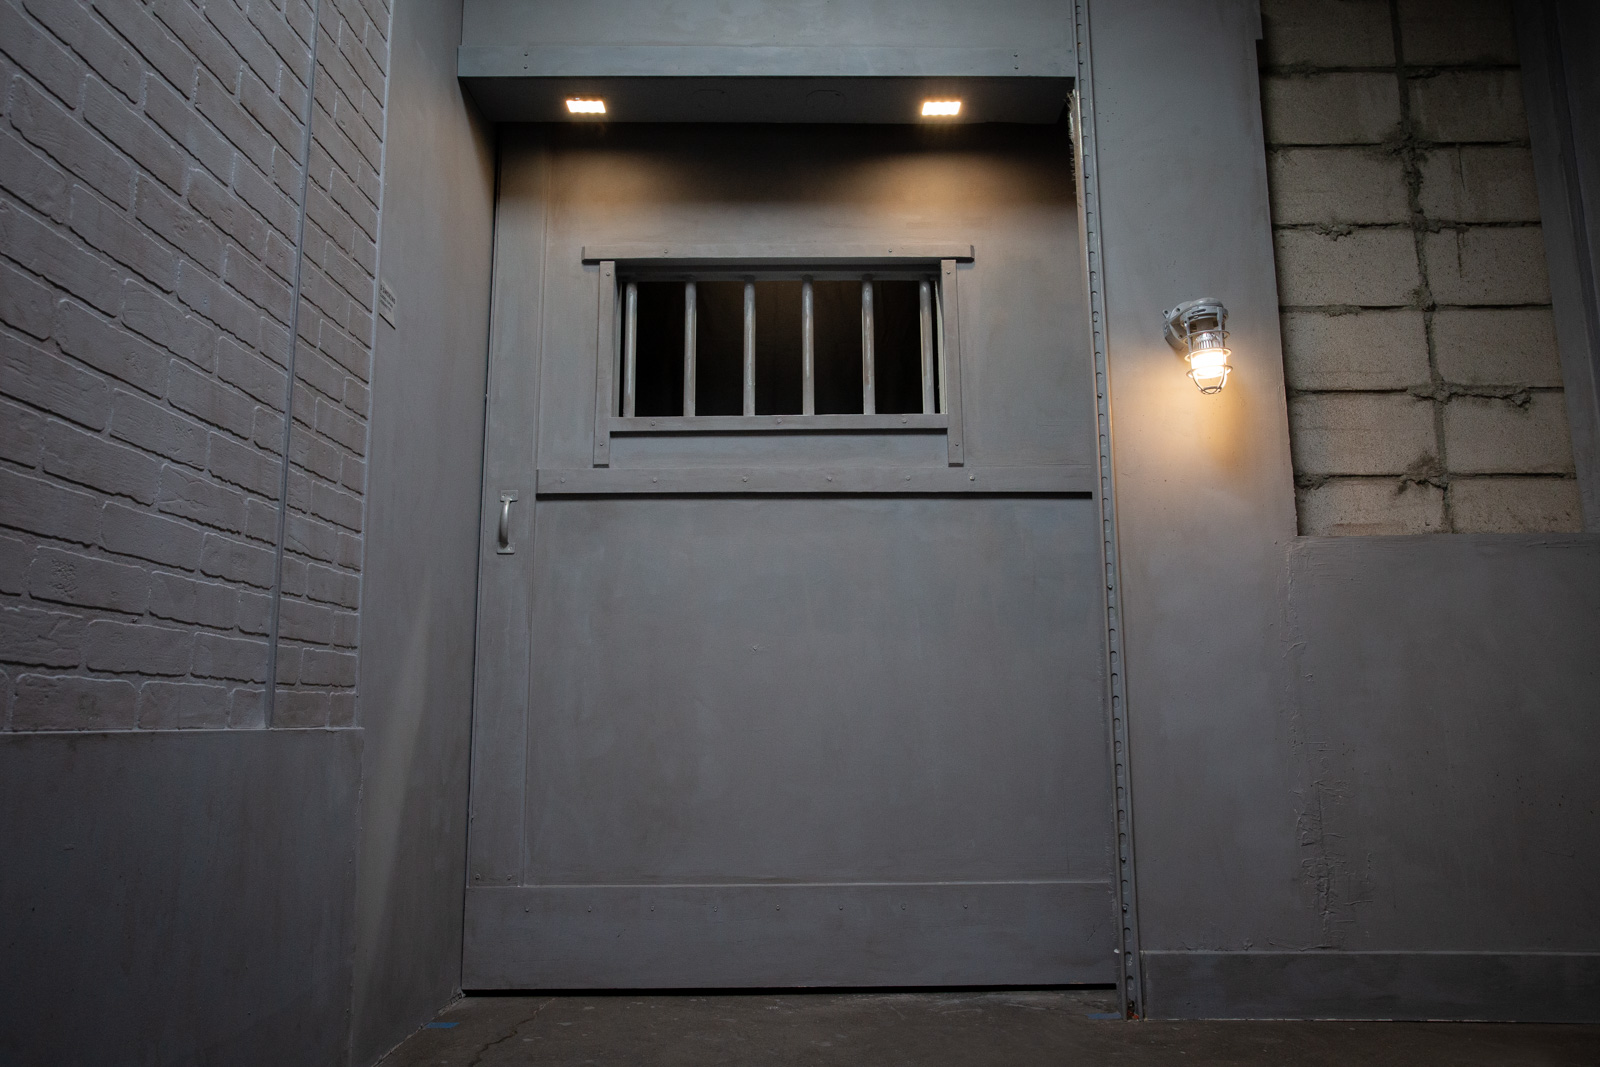 Jail visitation studio for filming in LA